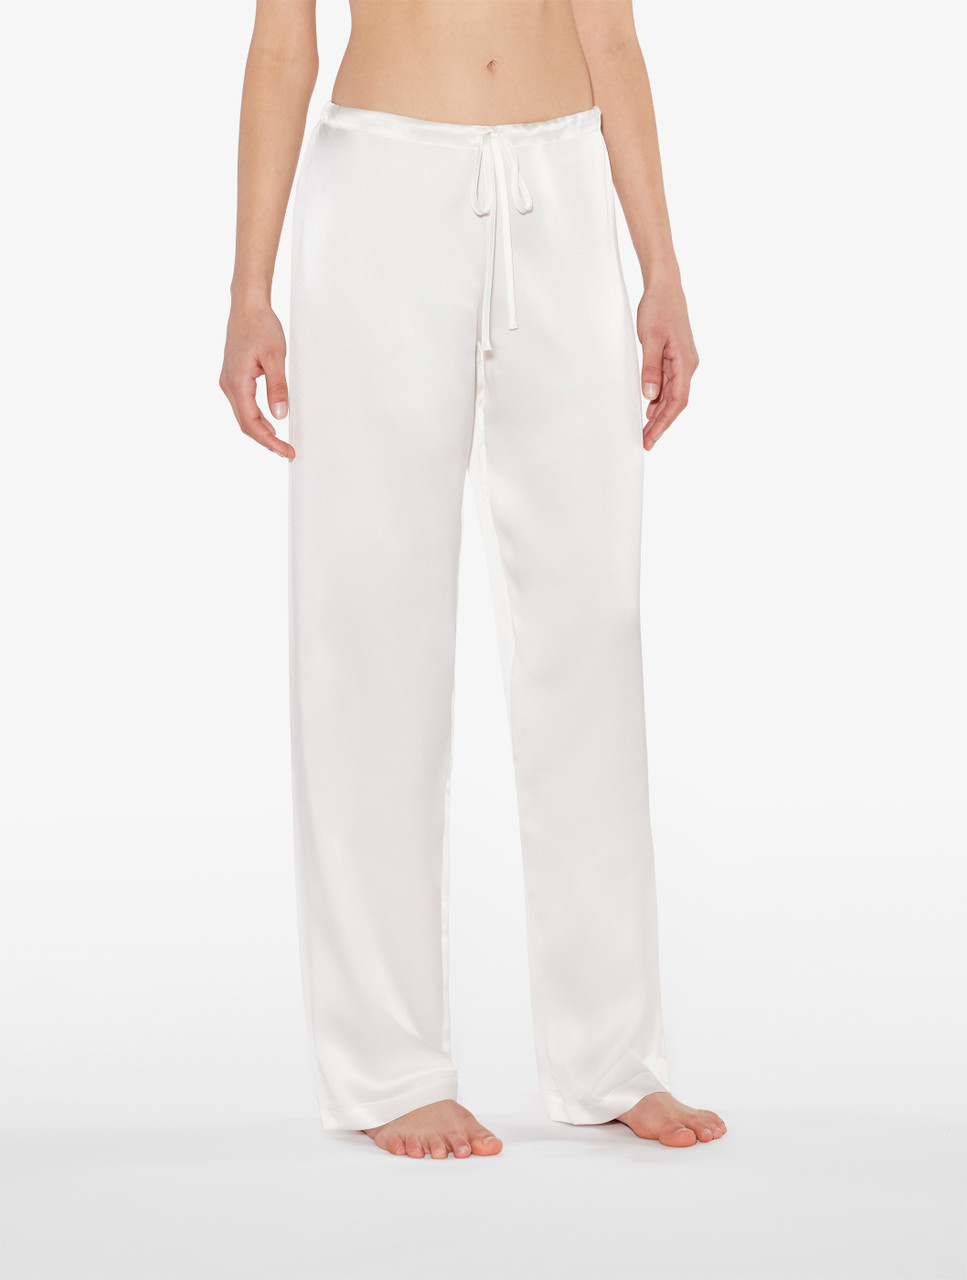 ESPA Freya Silk Pyjamas - Pearl White